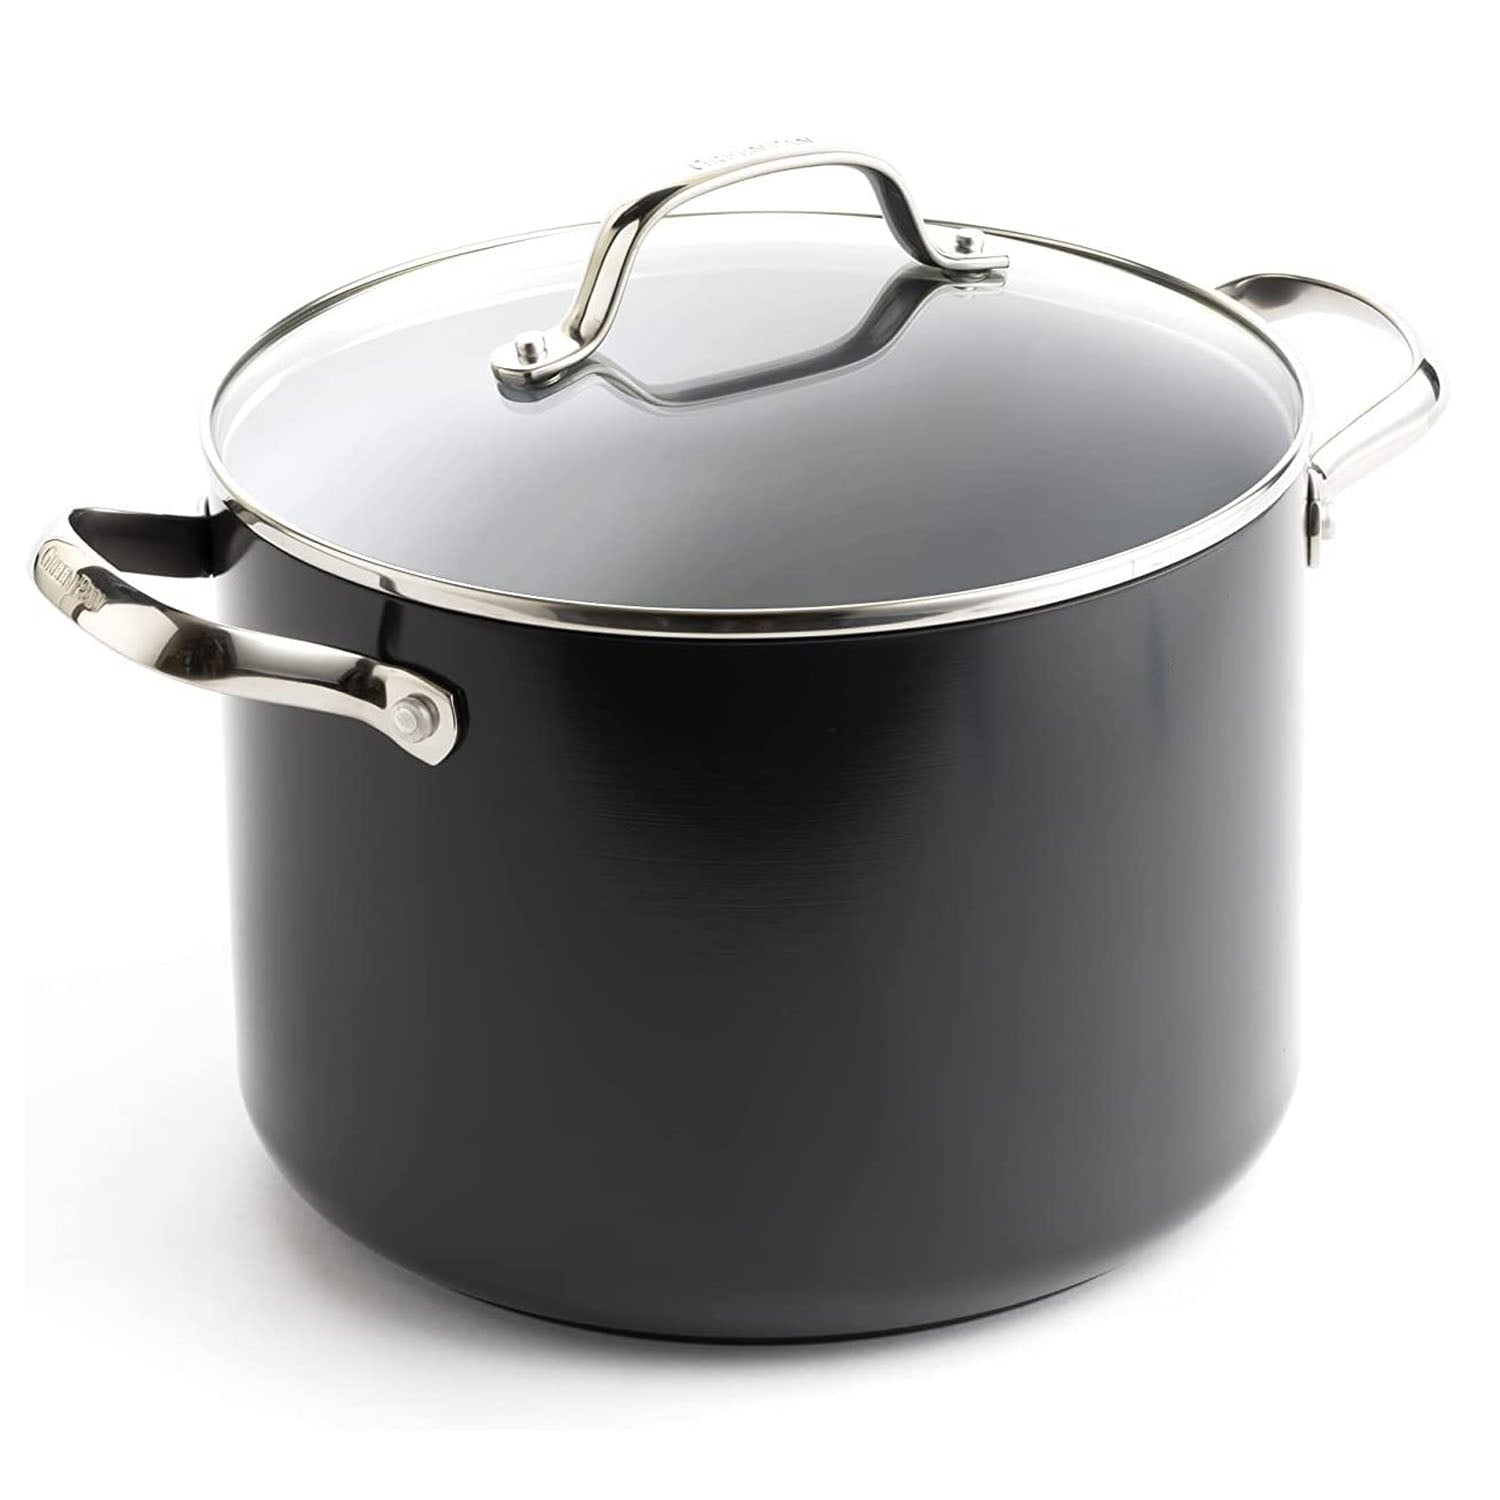  LEUGWAKN Stainless Steel Stock pot-10 Quart pot-Stockpots with  Lid -Soup Pot-Induction Pot-Cookware-Cooking Pot-crock pot : Everything Else